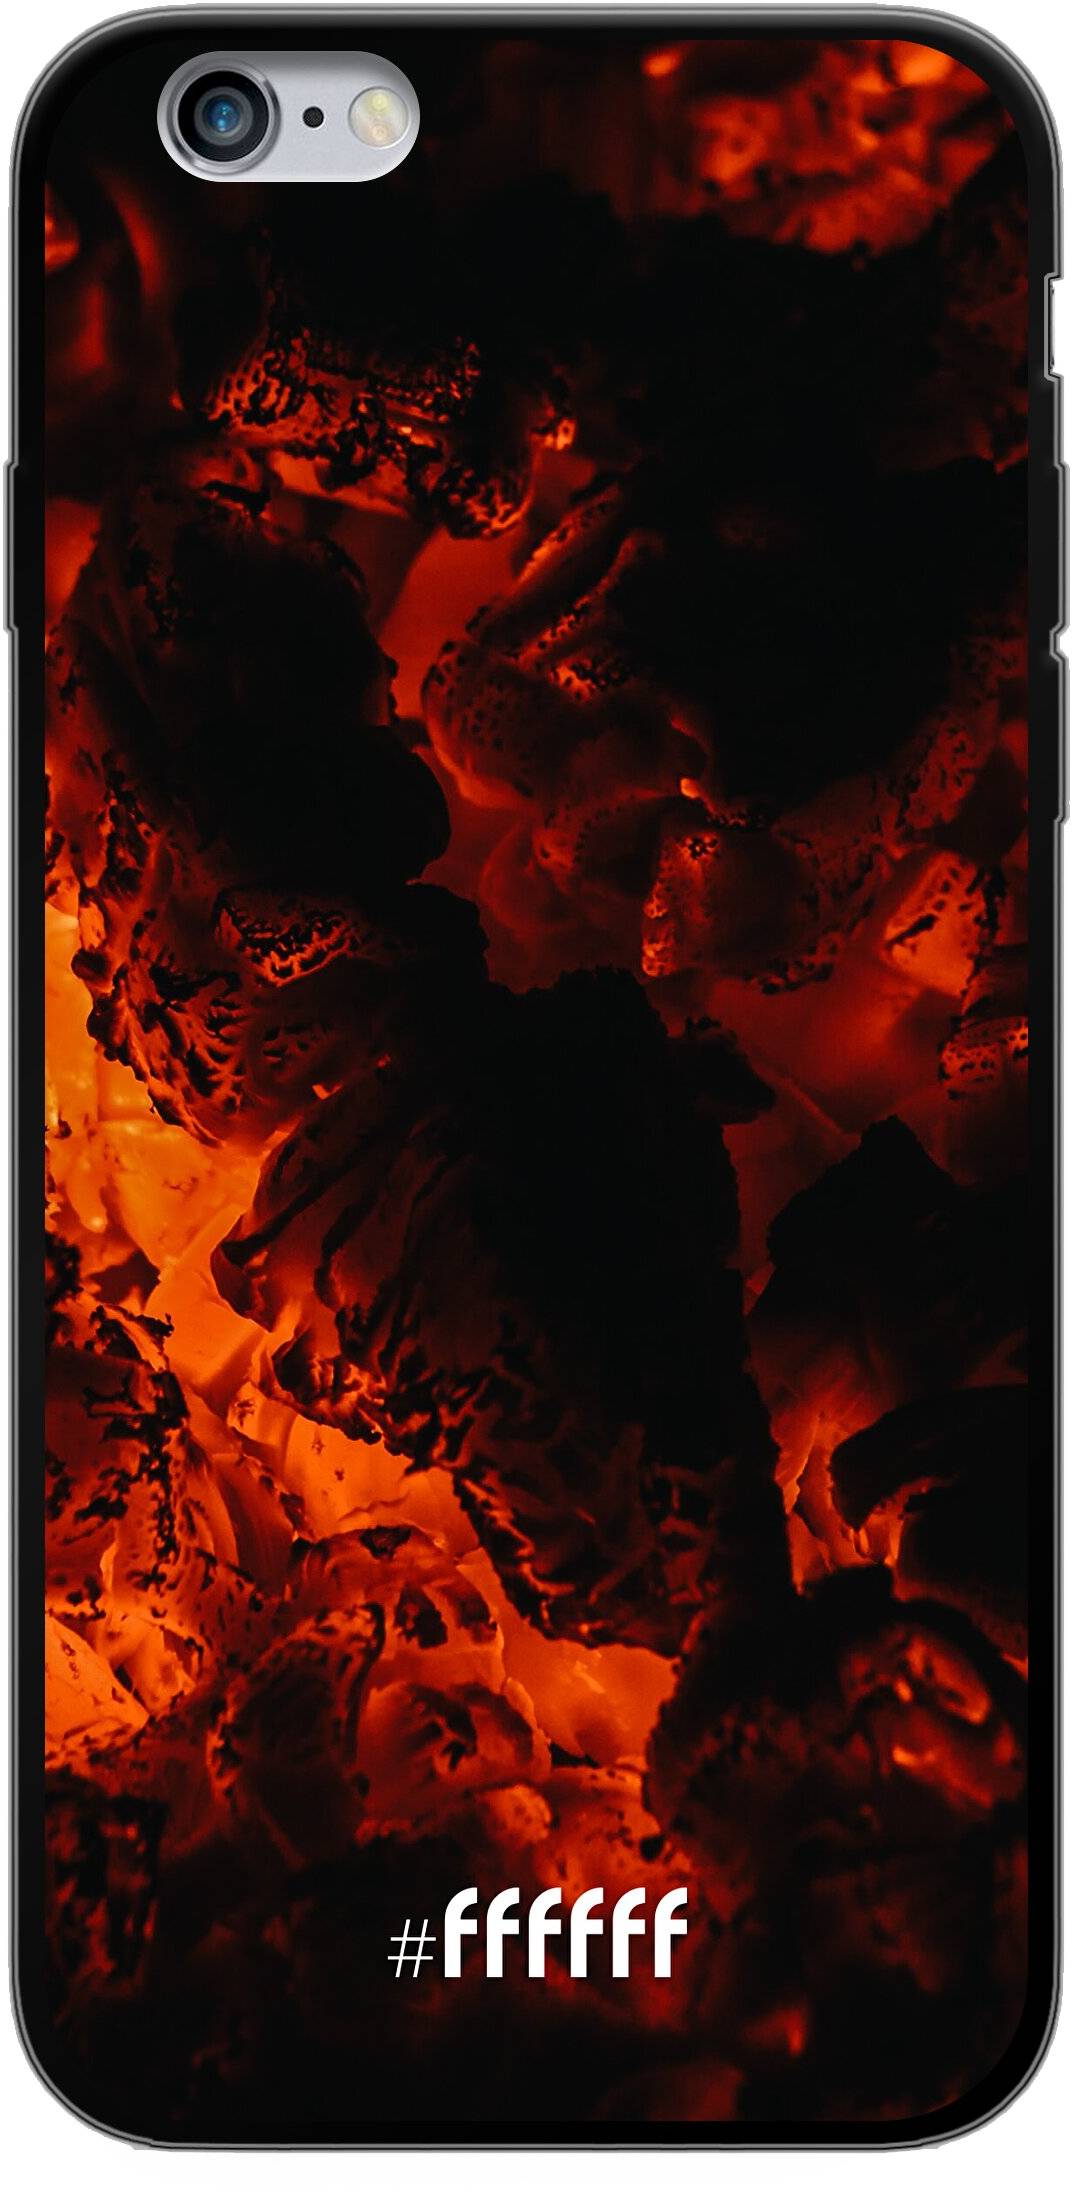 Hot Hot Hot iPhone 6s